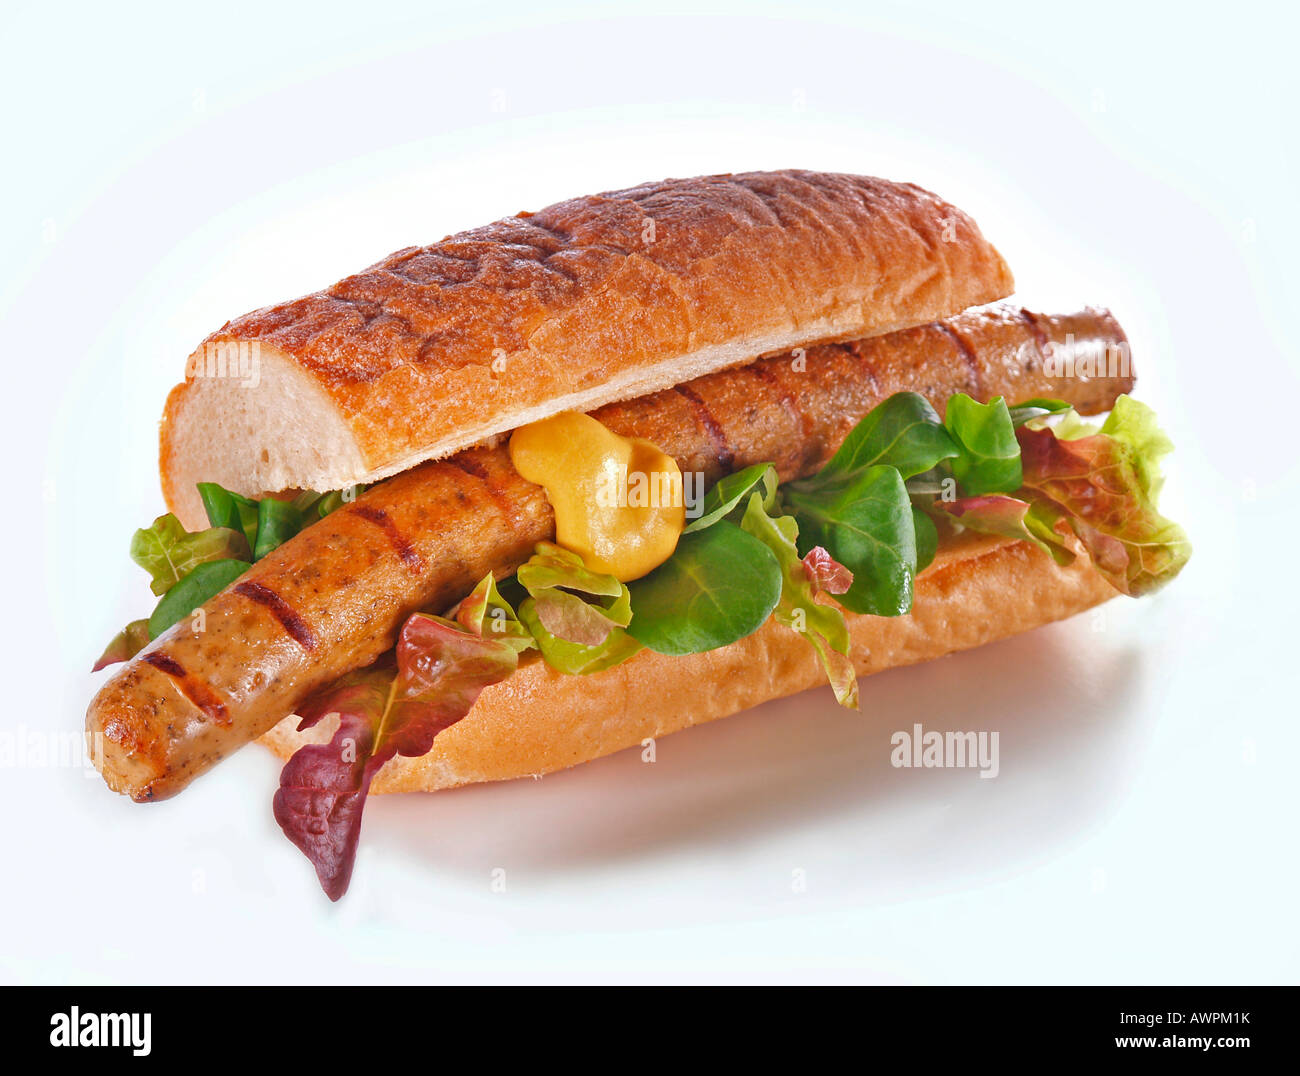 Veggie (tofu) bratwurst, mustard and lettuce on a baguette Stock Photo